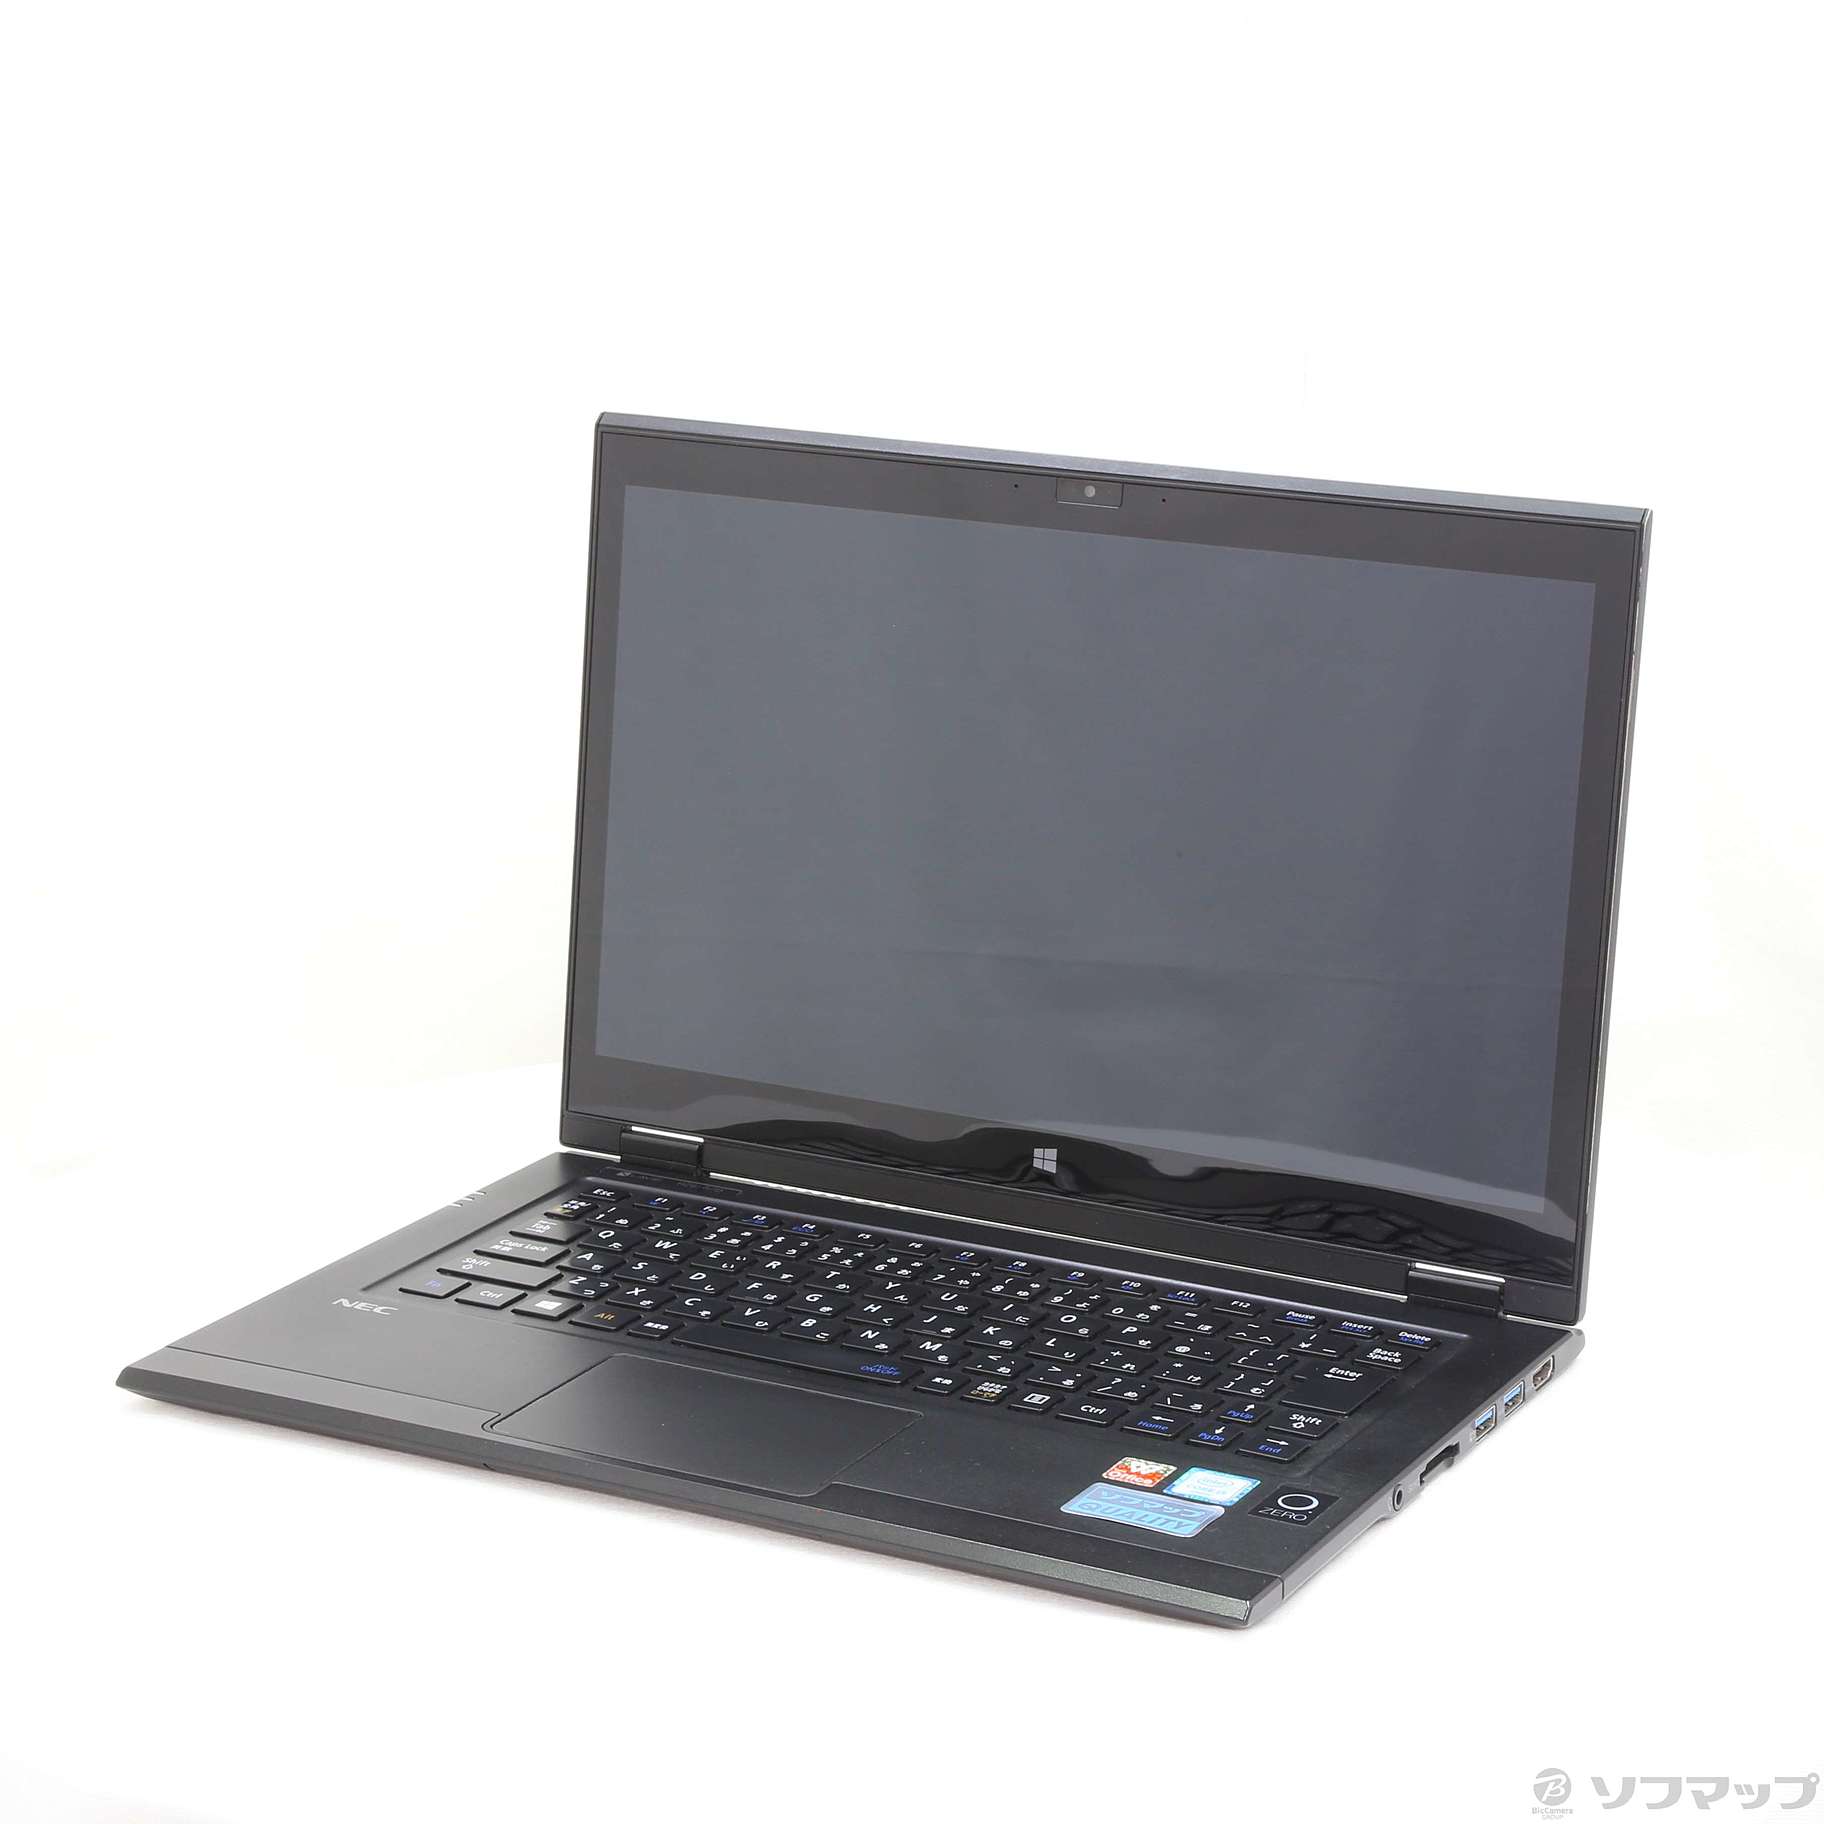 LaVie Hybrid ZERO PC-HZ650DAB ストームブラック 〔Windows 10〕